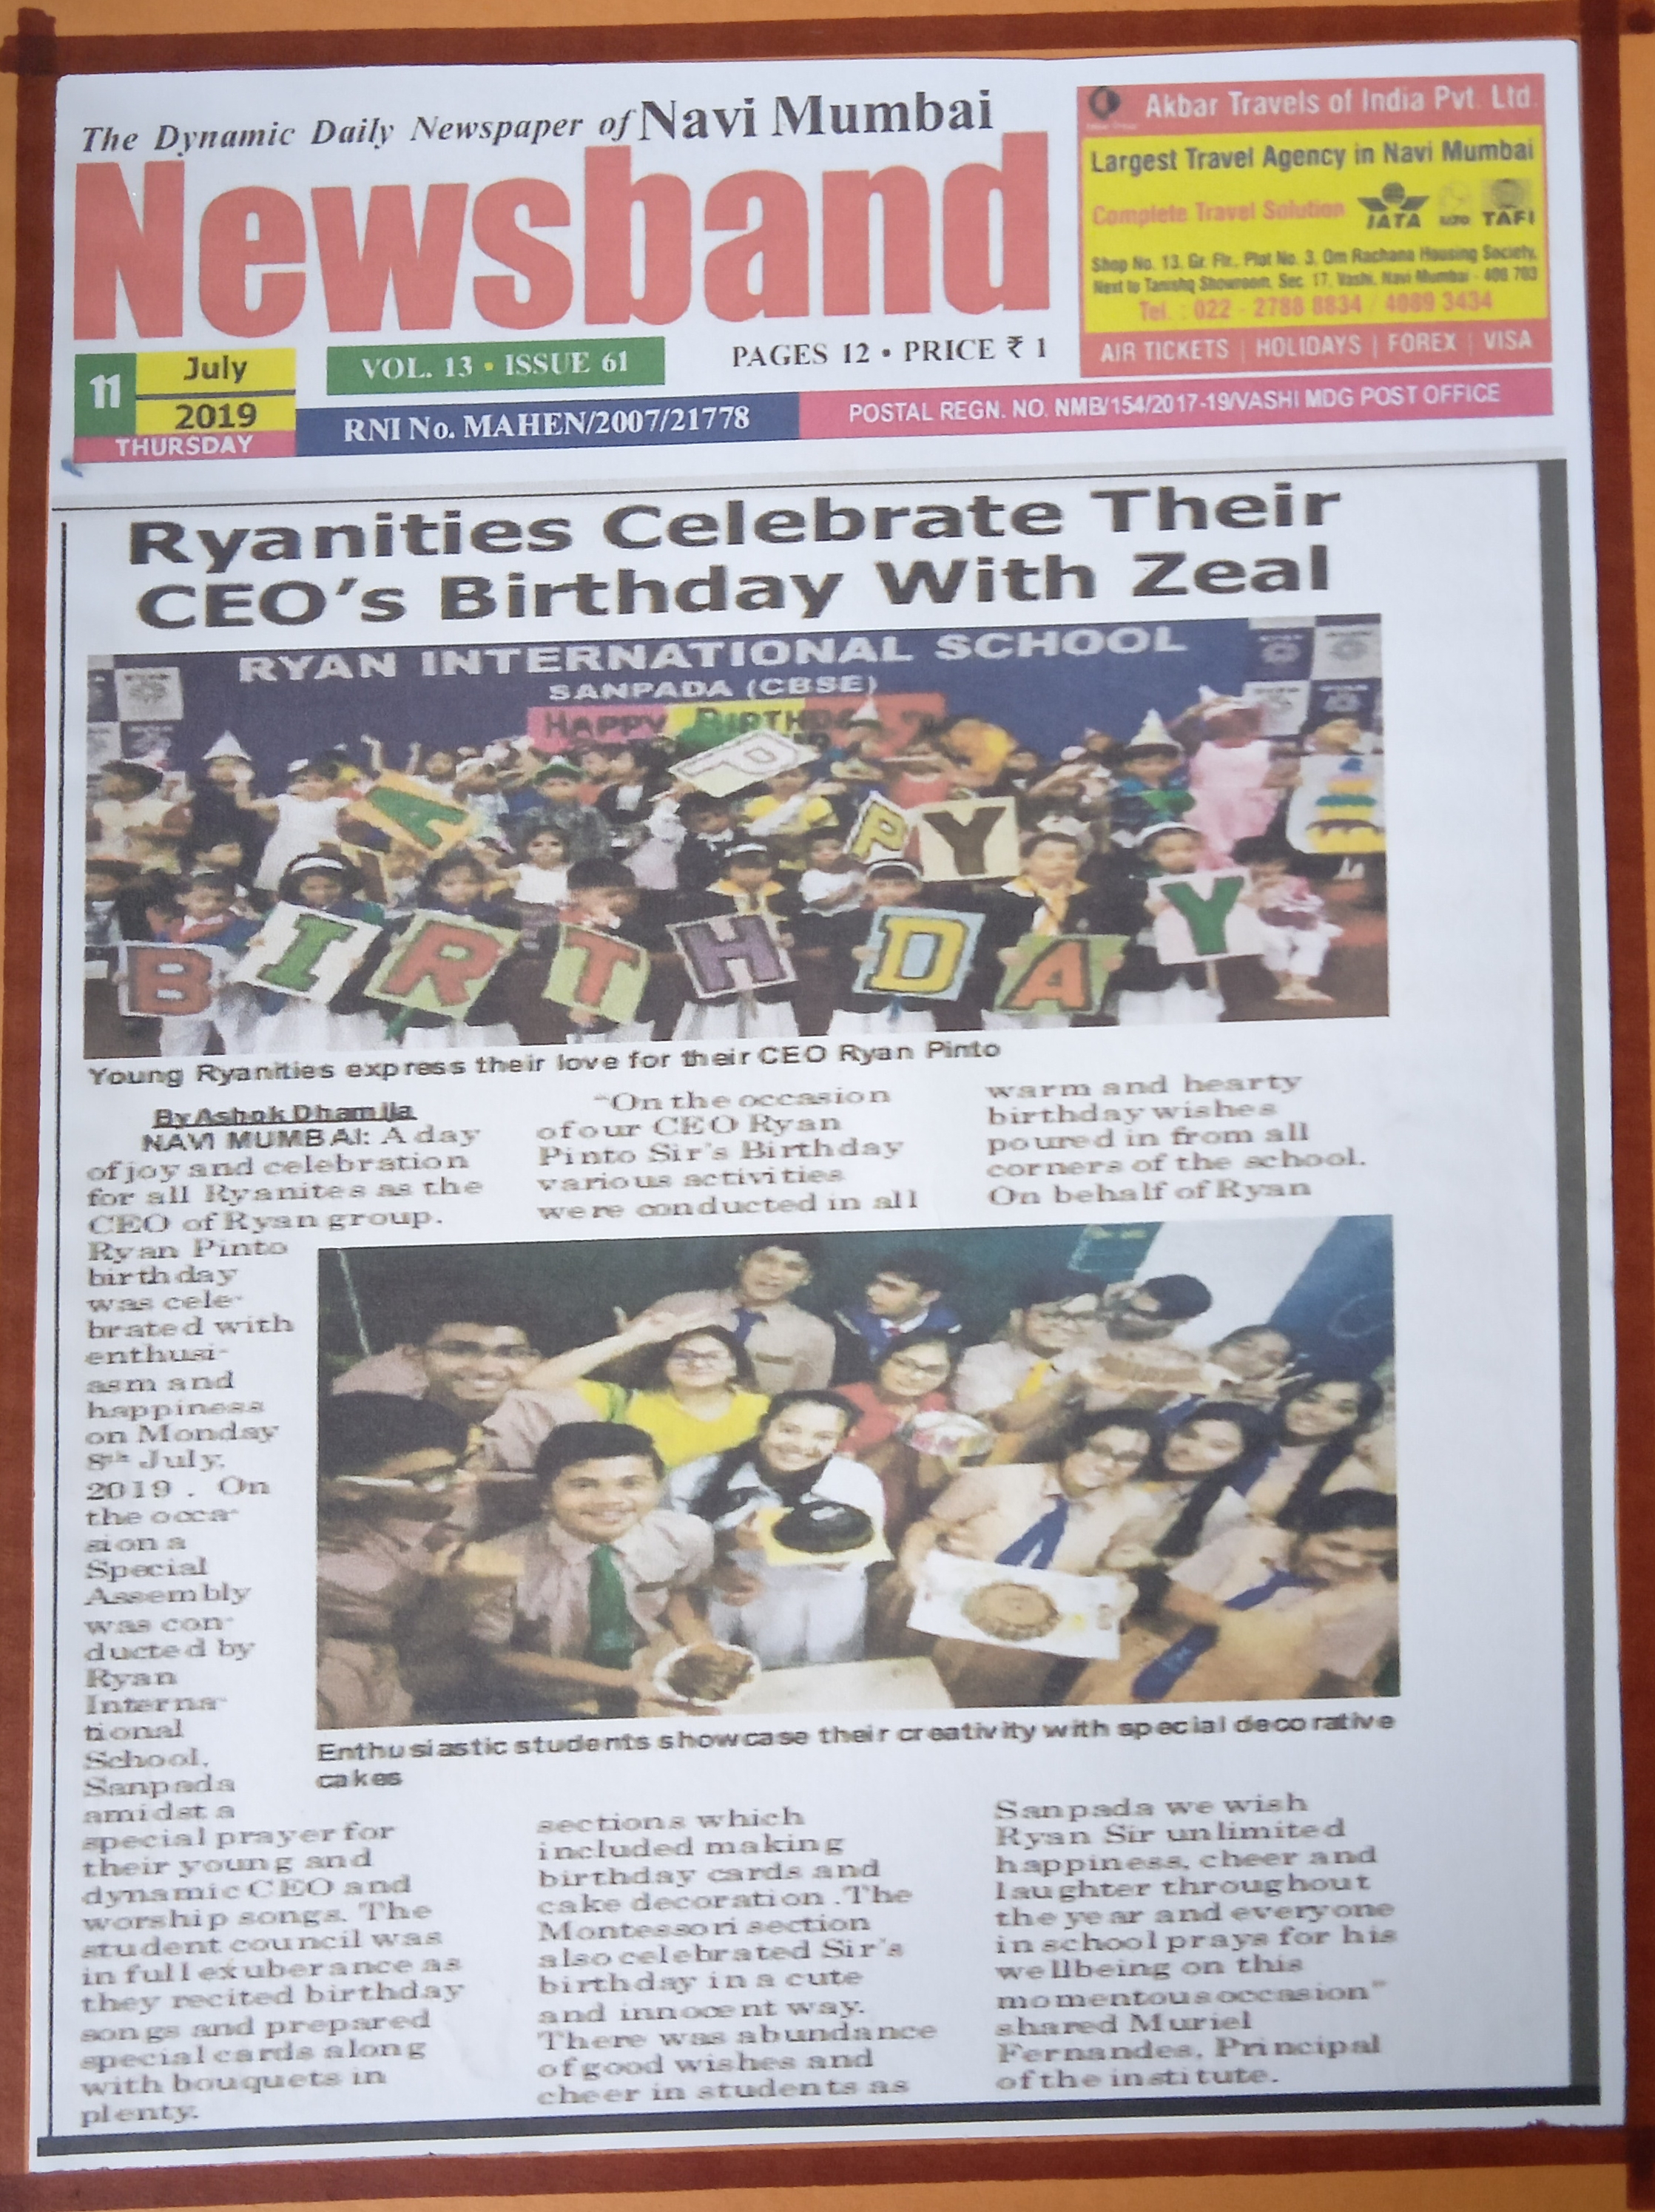 Ryan sir’s birthday celebrations was featured in Newsband - Ryan International School, Sanpada